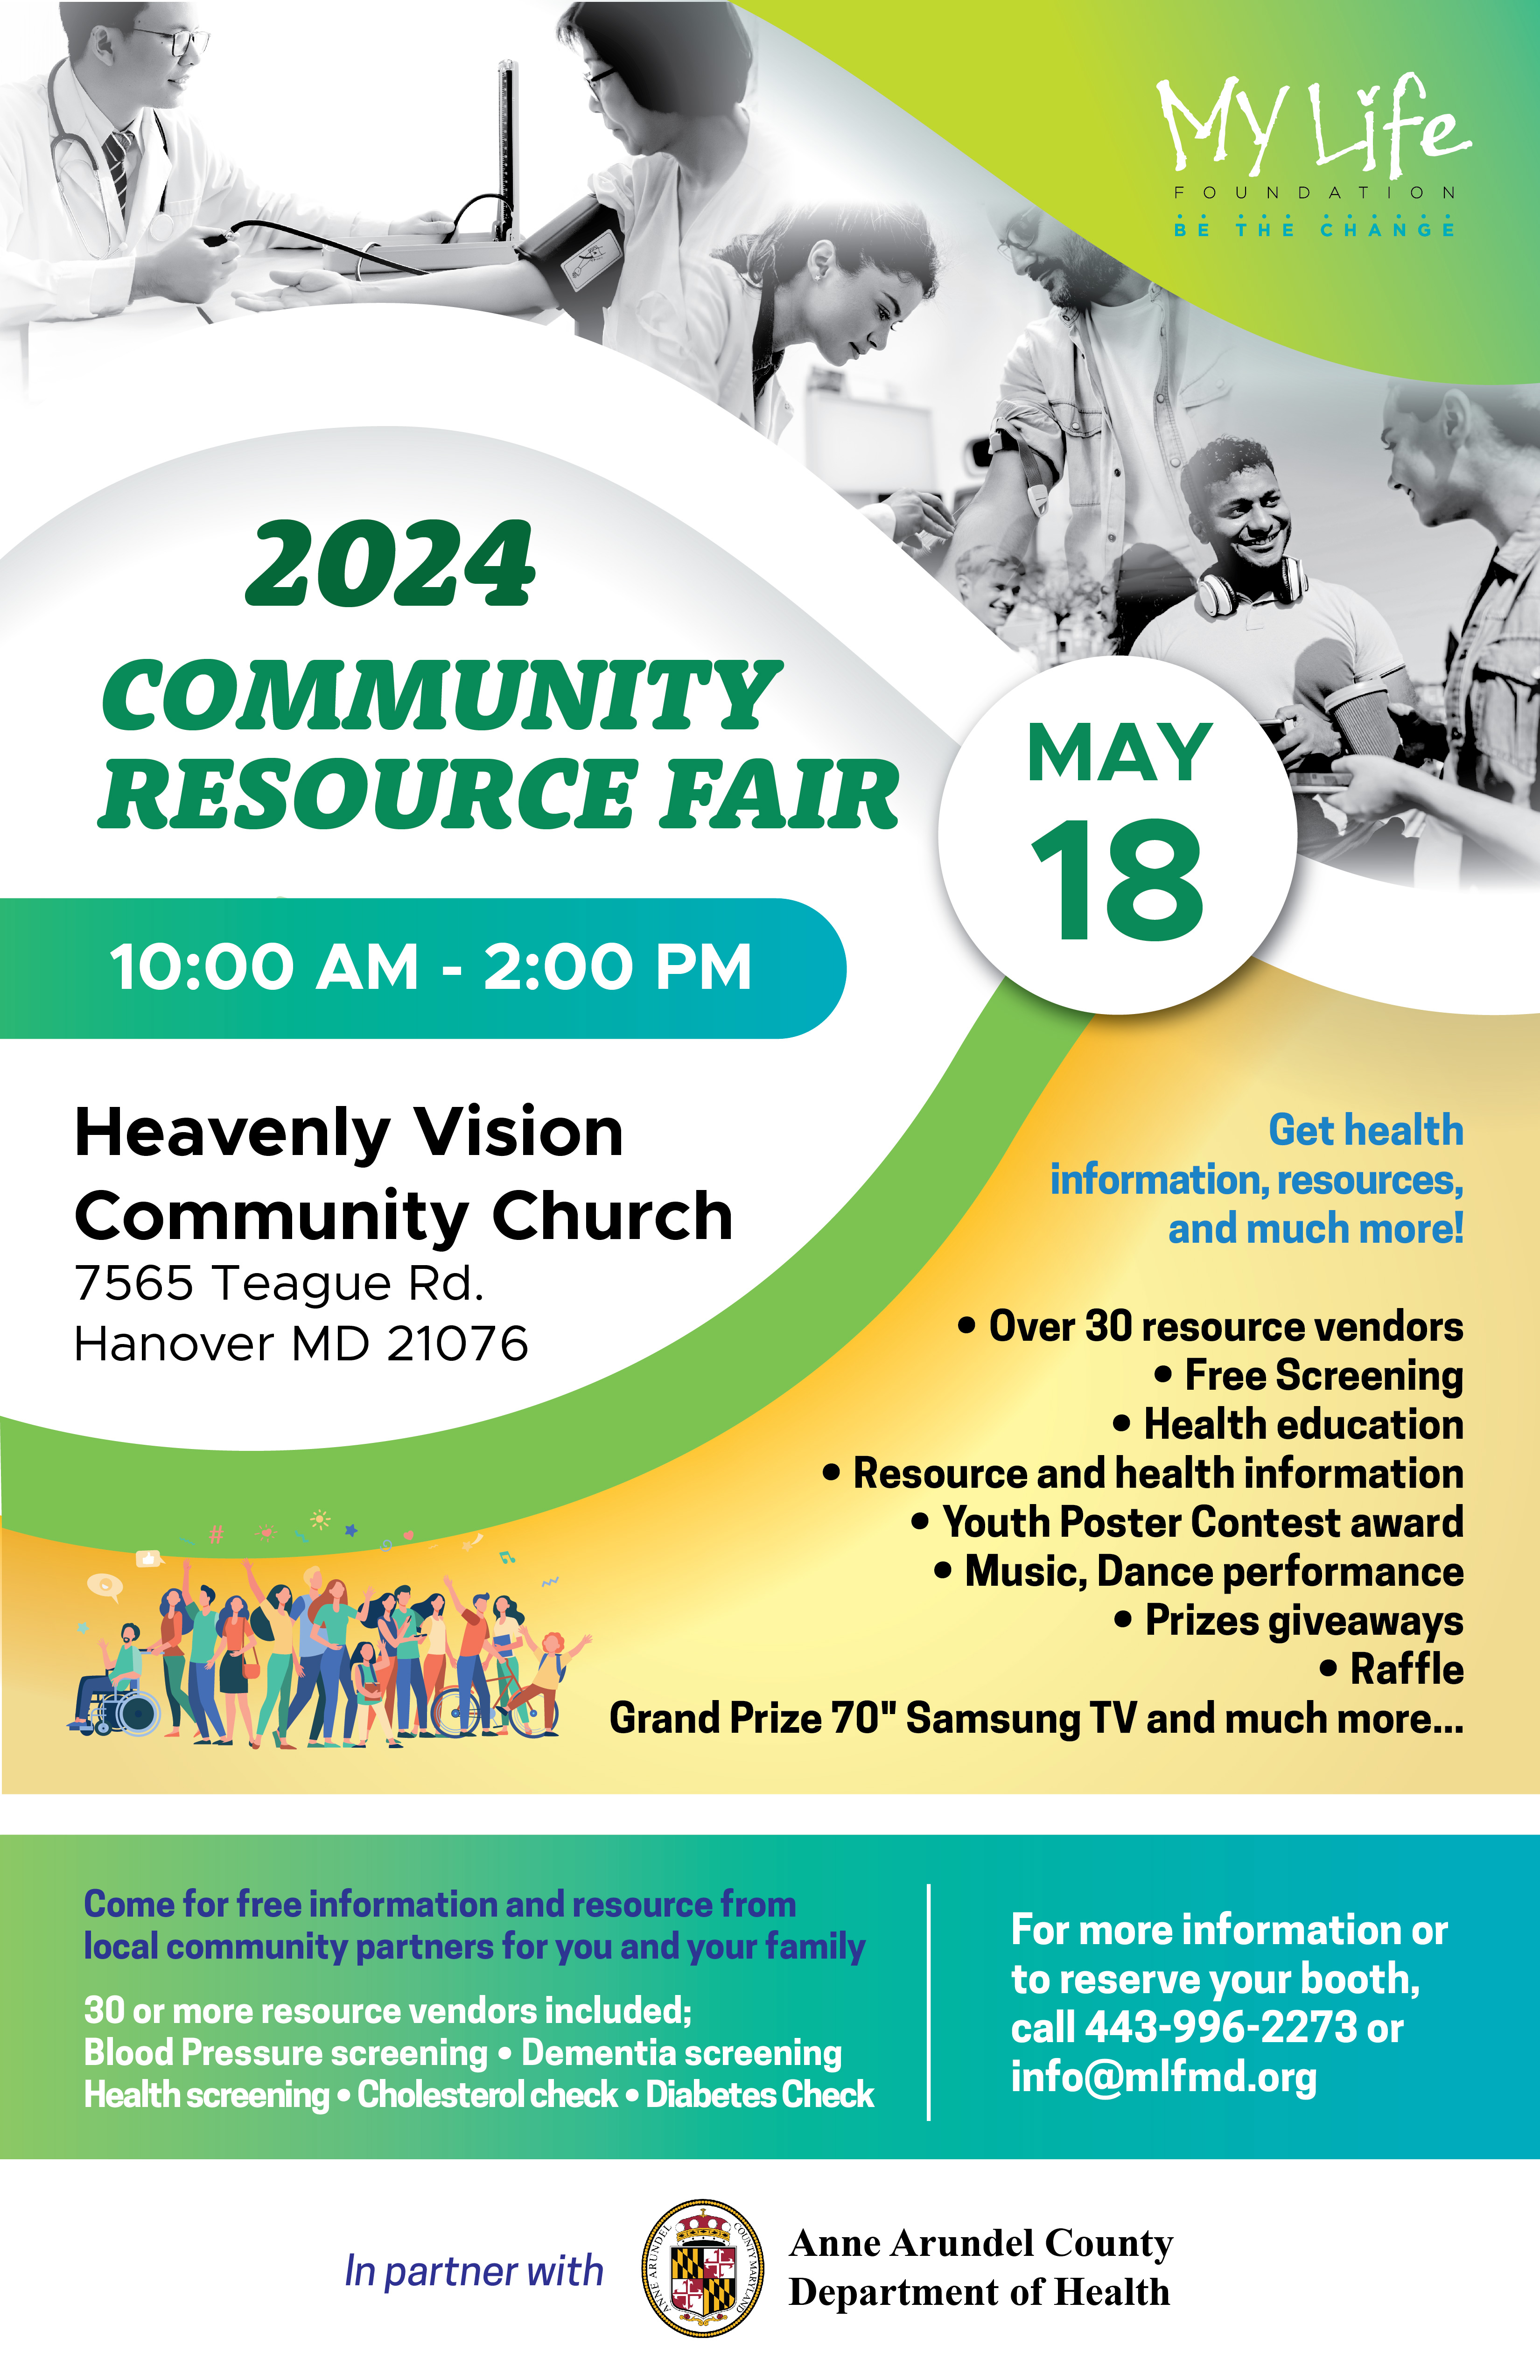 2024 Community Resource Fair - May 18, 10:00 A.M. - 2:00 P.M., Heavenly Vision Community Church